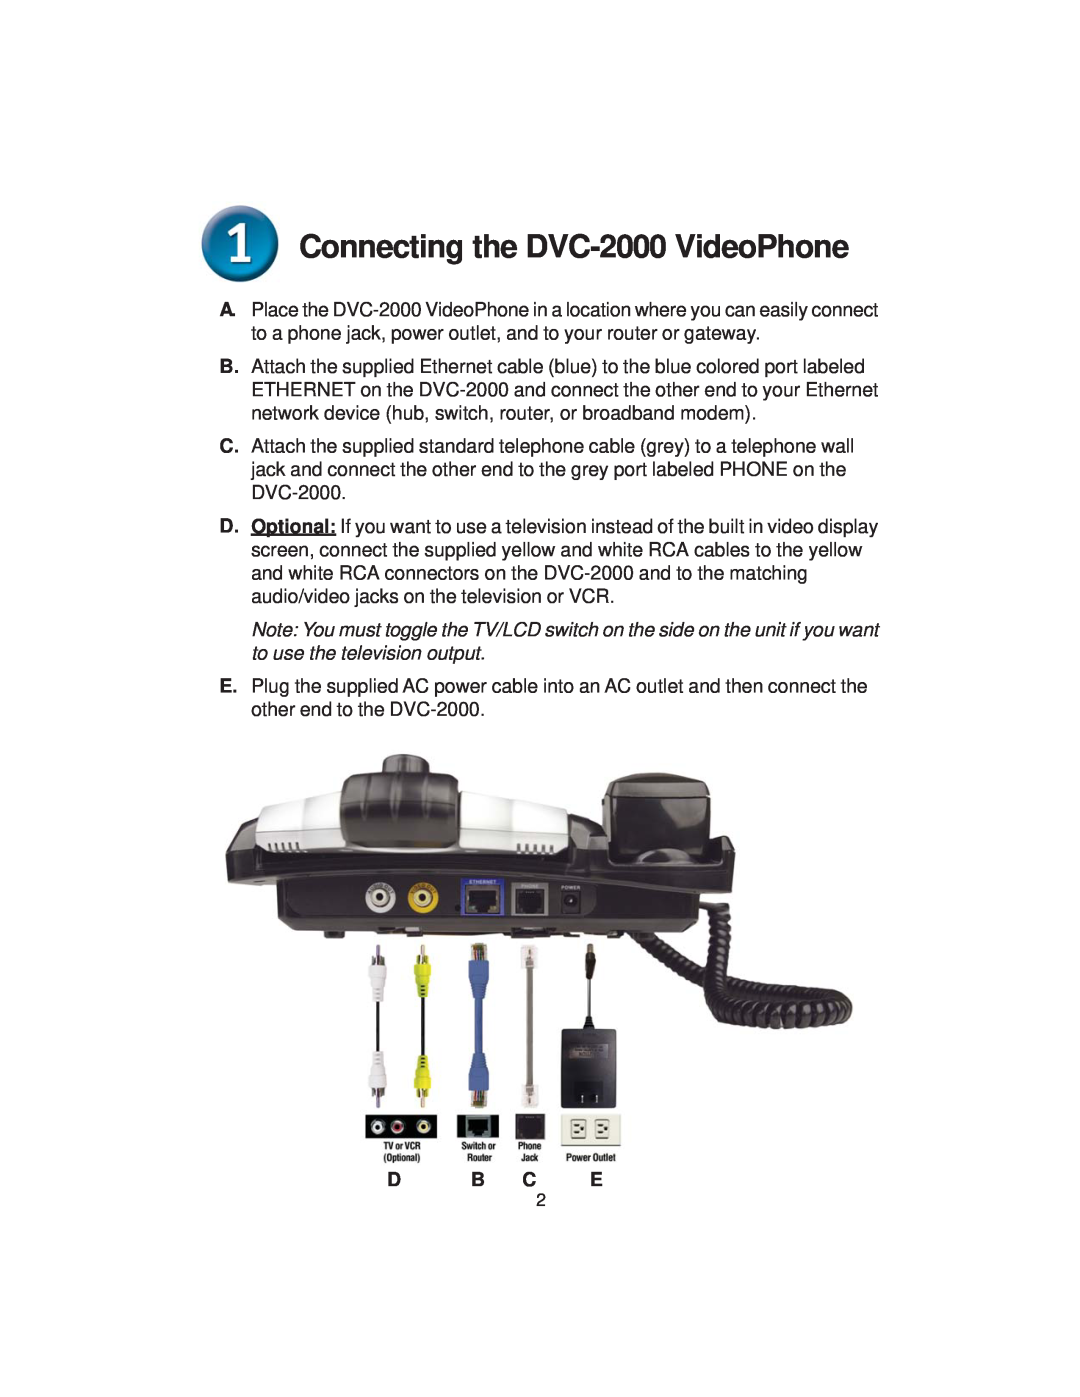 D-Link warranty Connecting the DVC-2000 VideoPhone, D B C E 